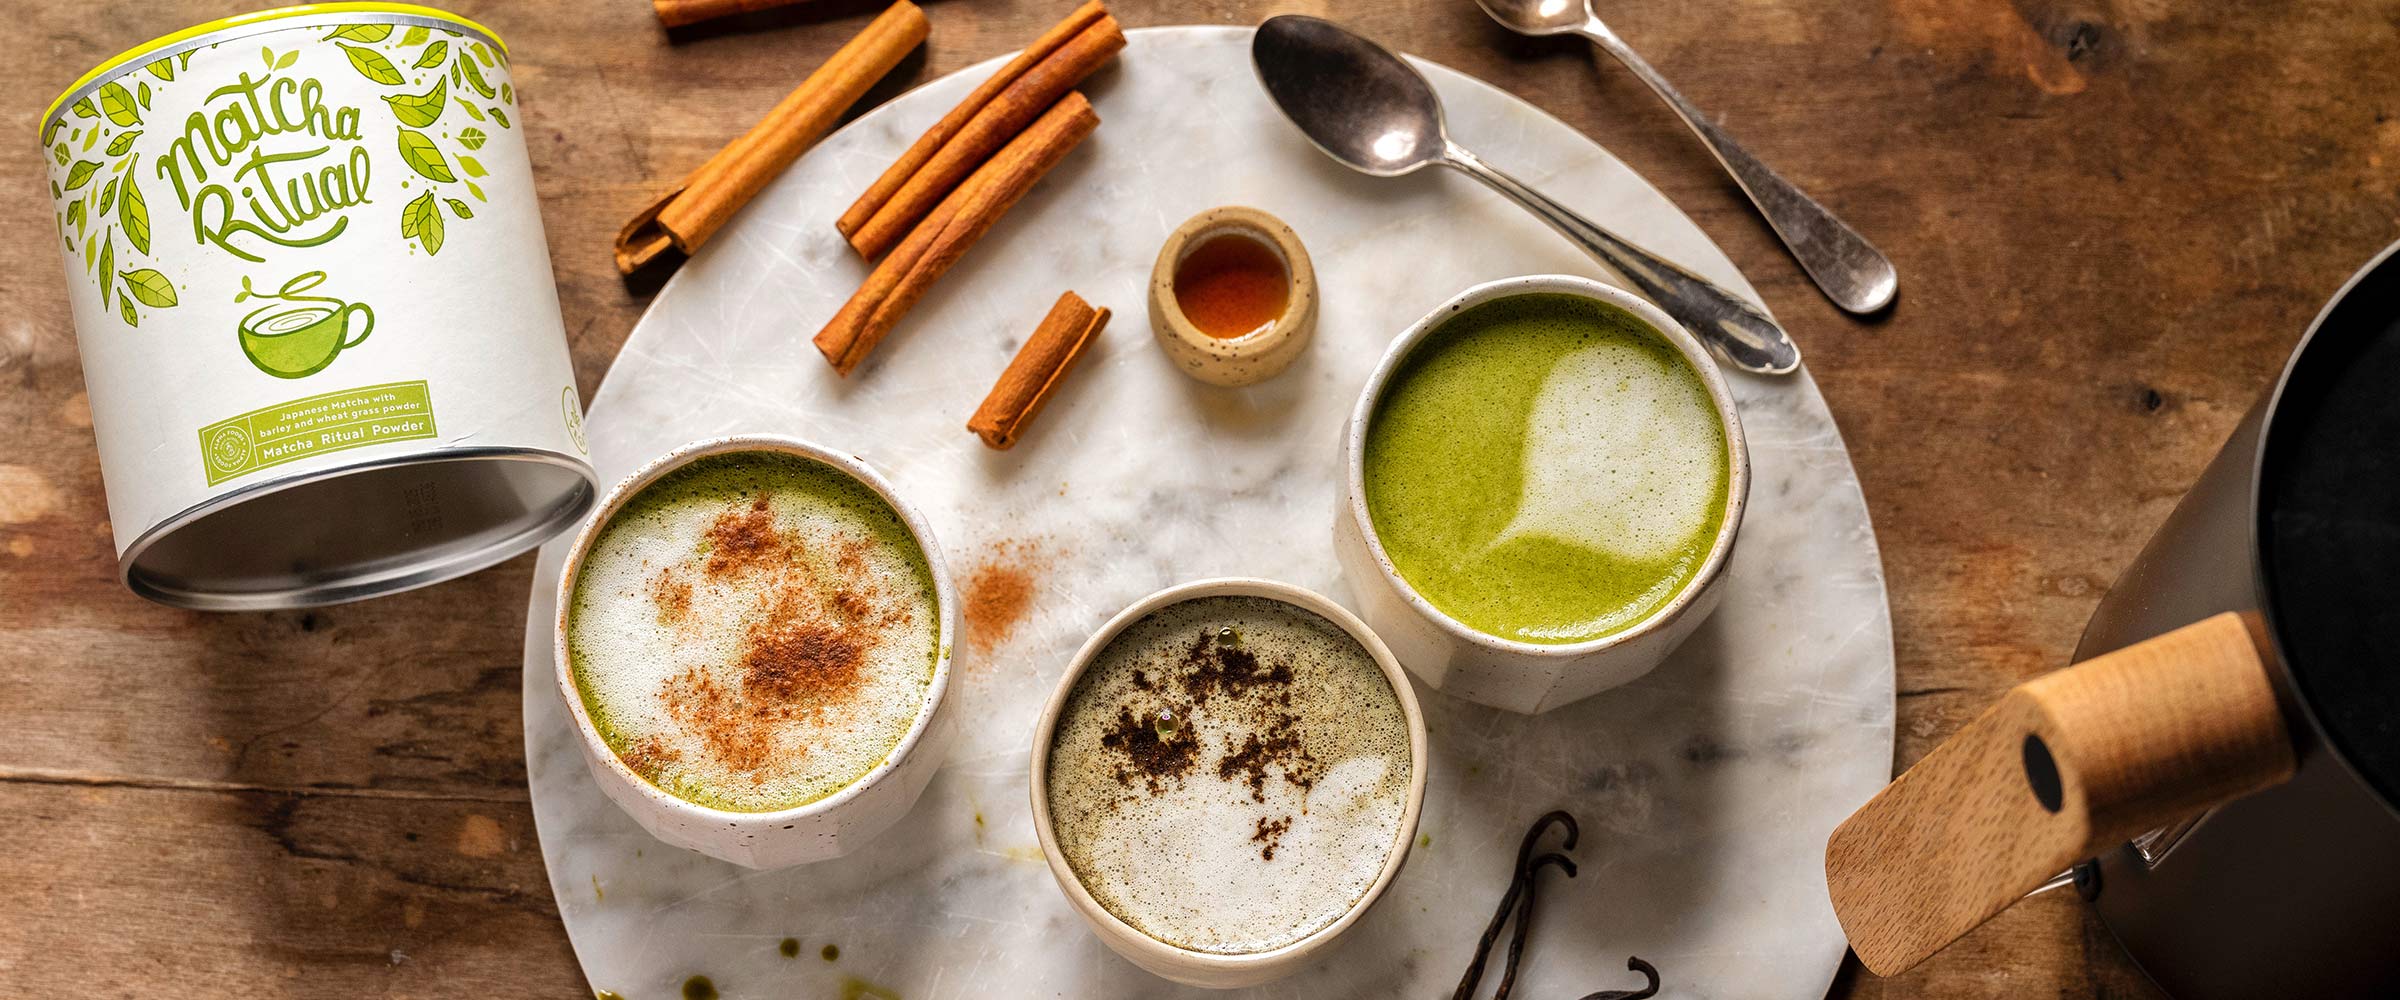 How To Make Matcha Green Tea Latte - Alphafoodie